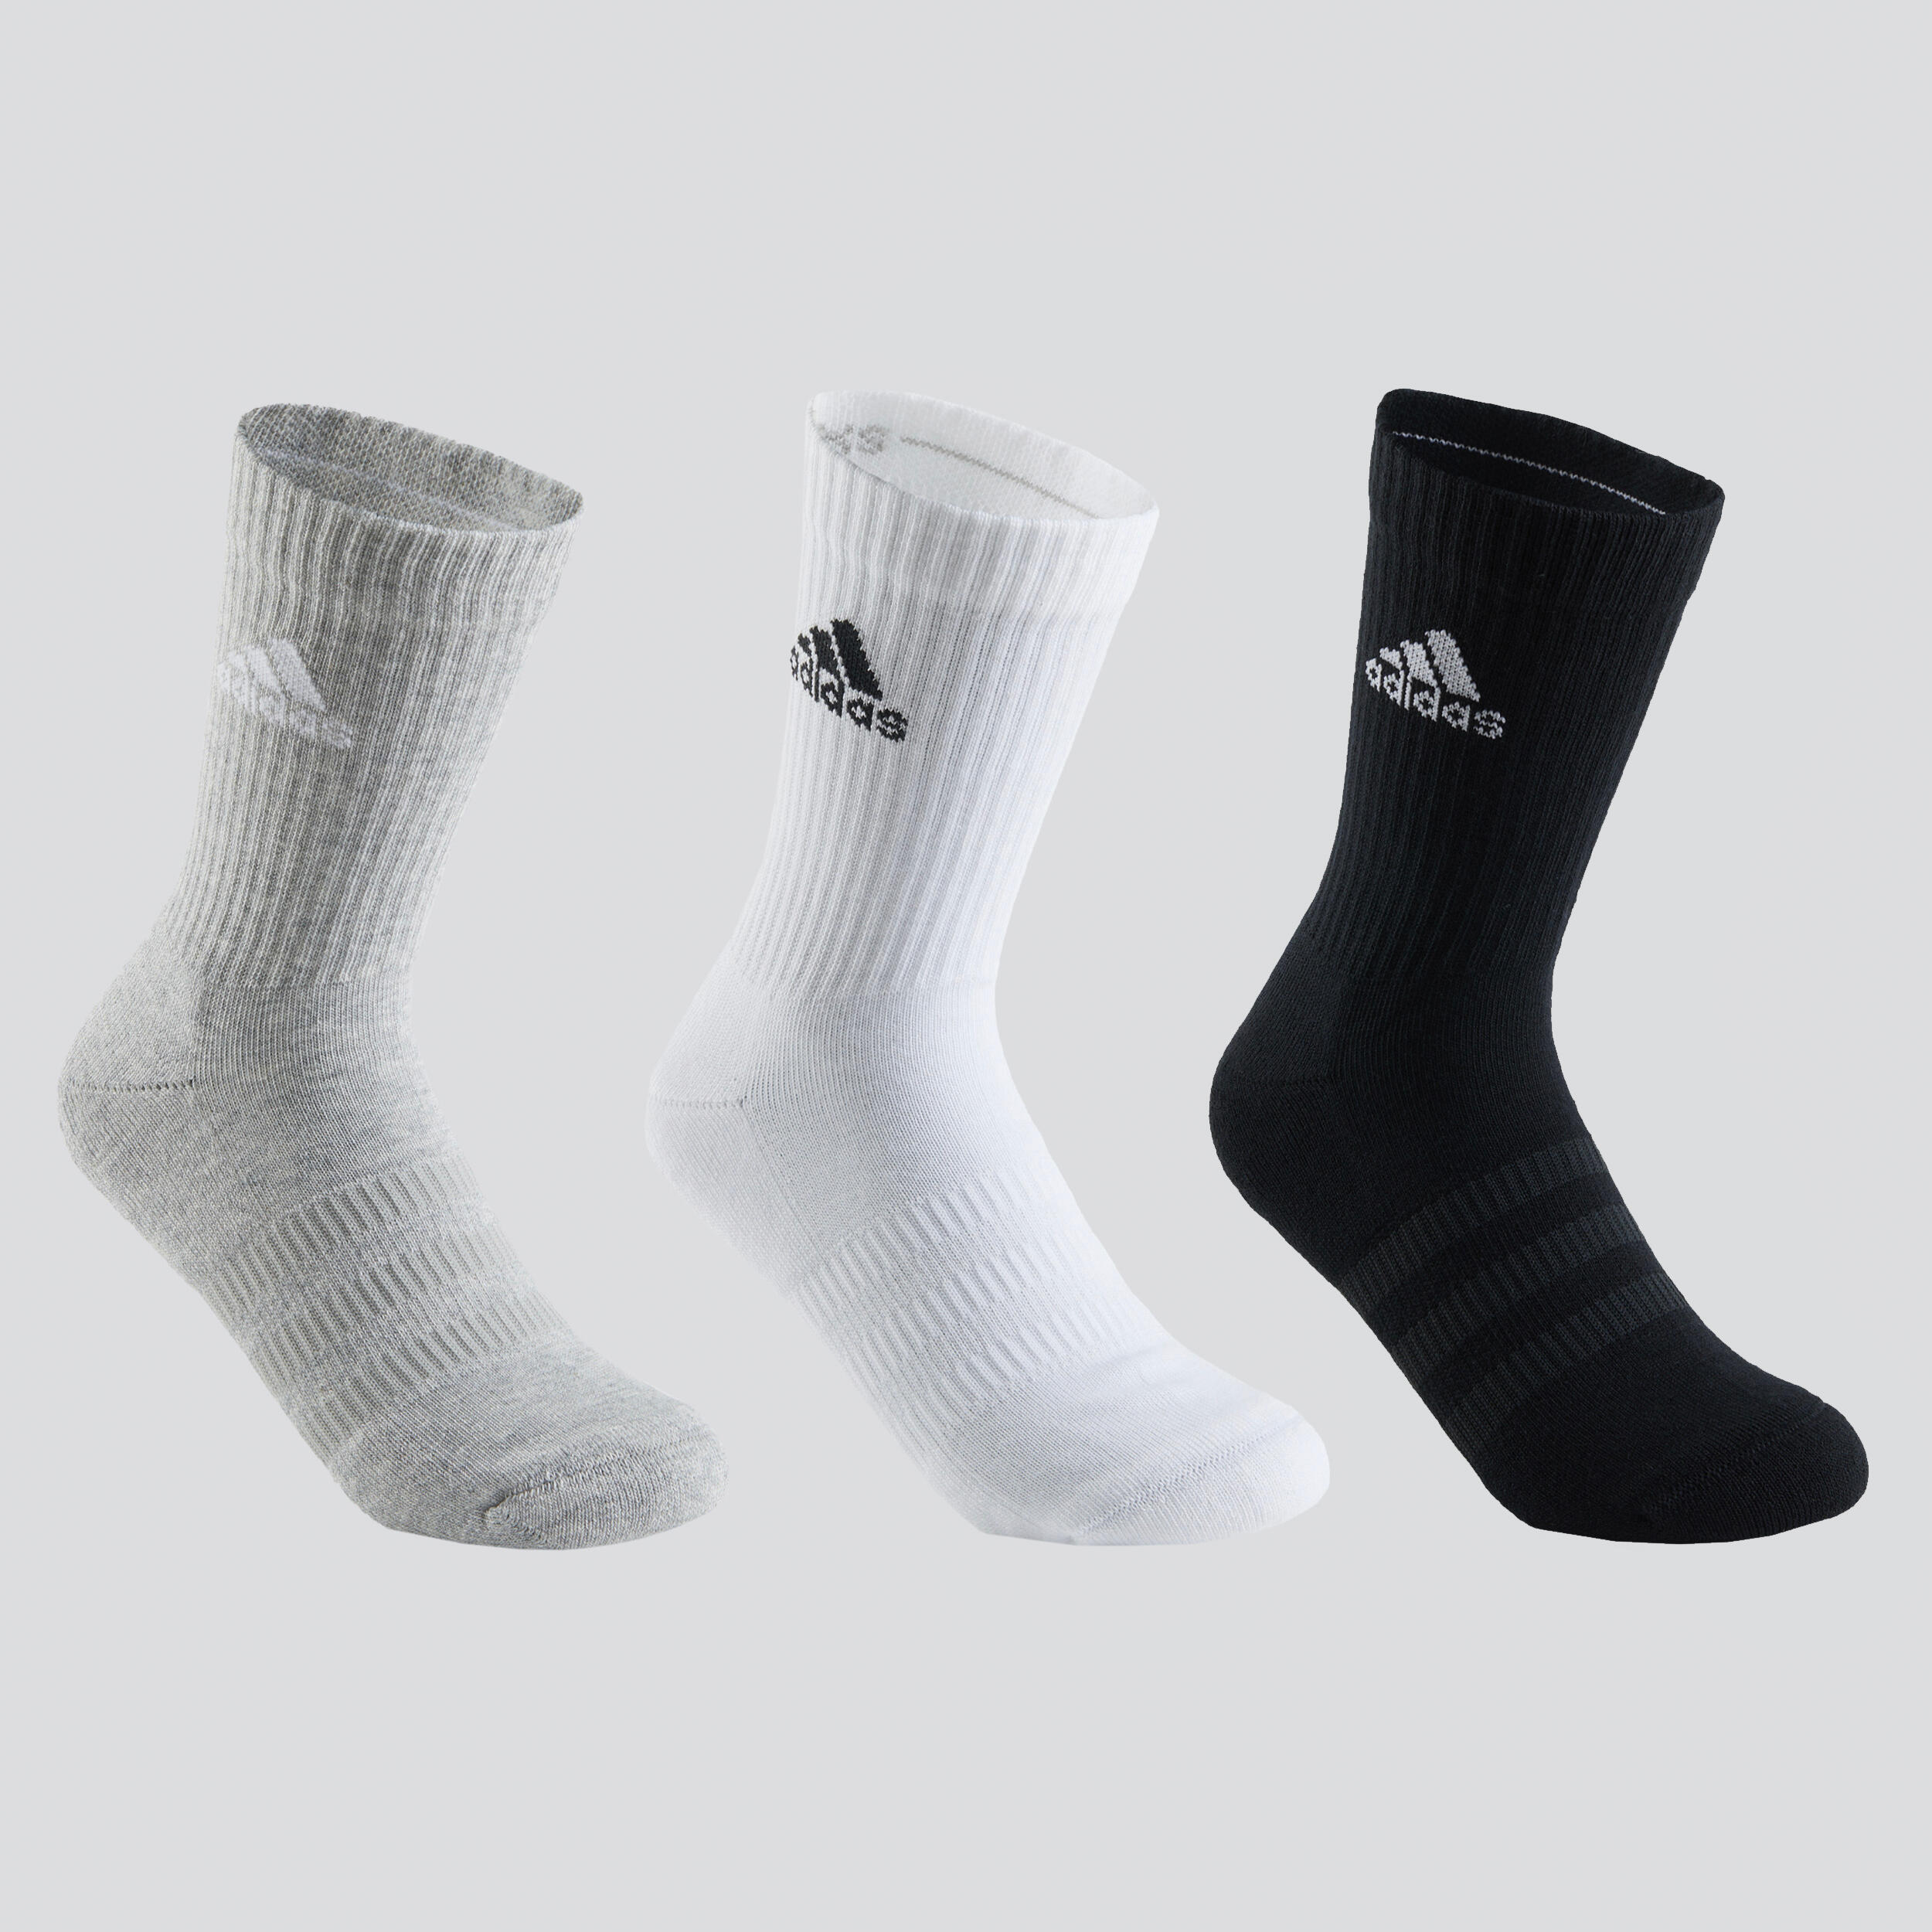 ADIDAS High Sports Socks Tri-Pack - Grey/White/Black